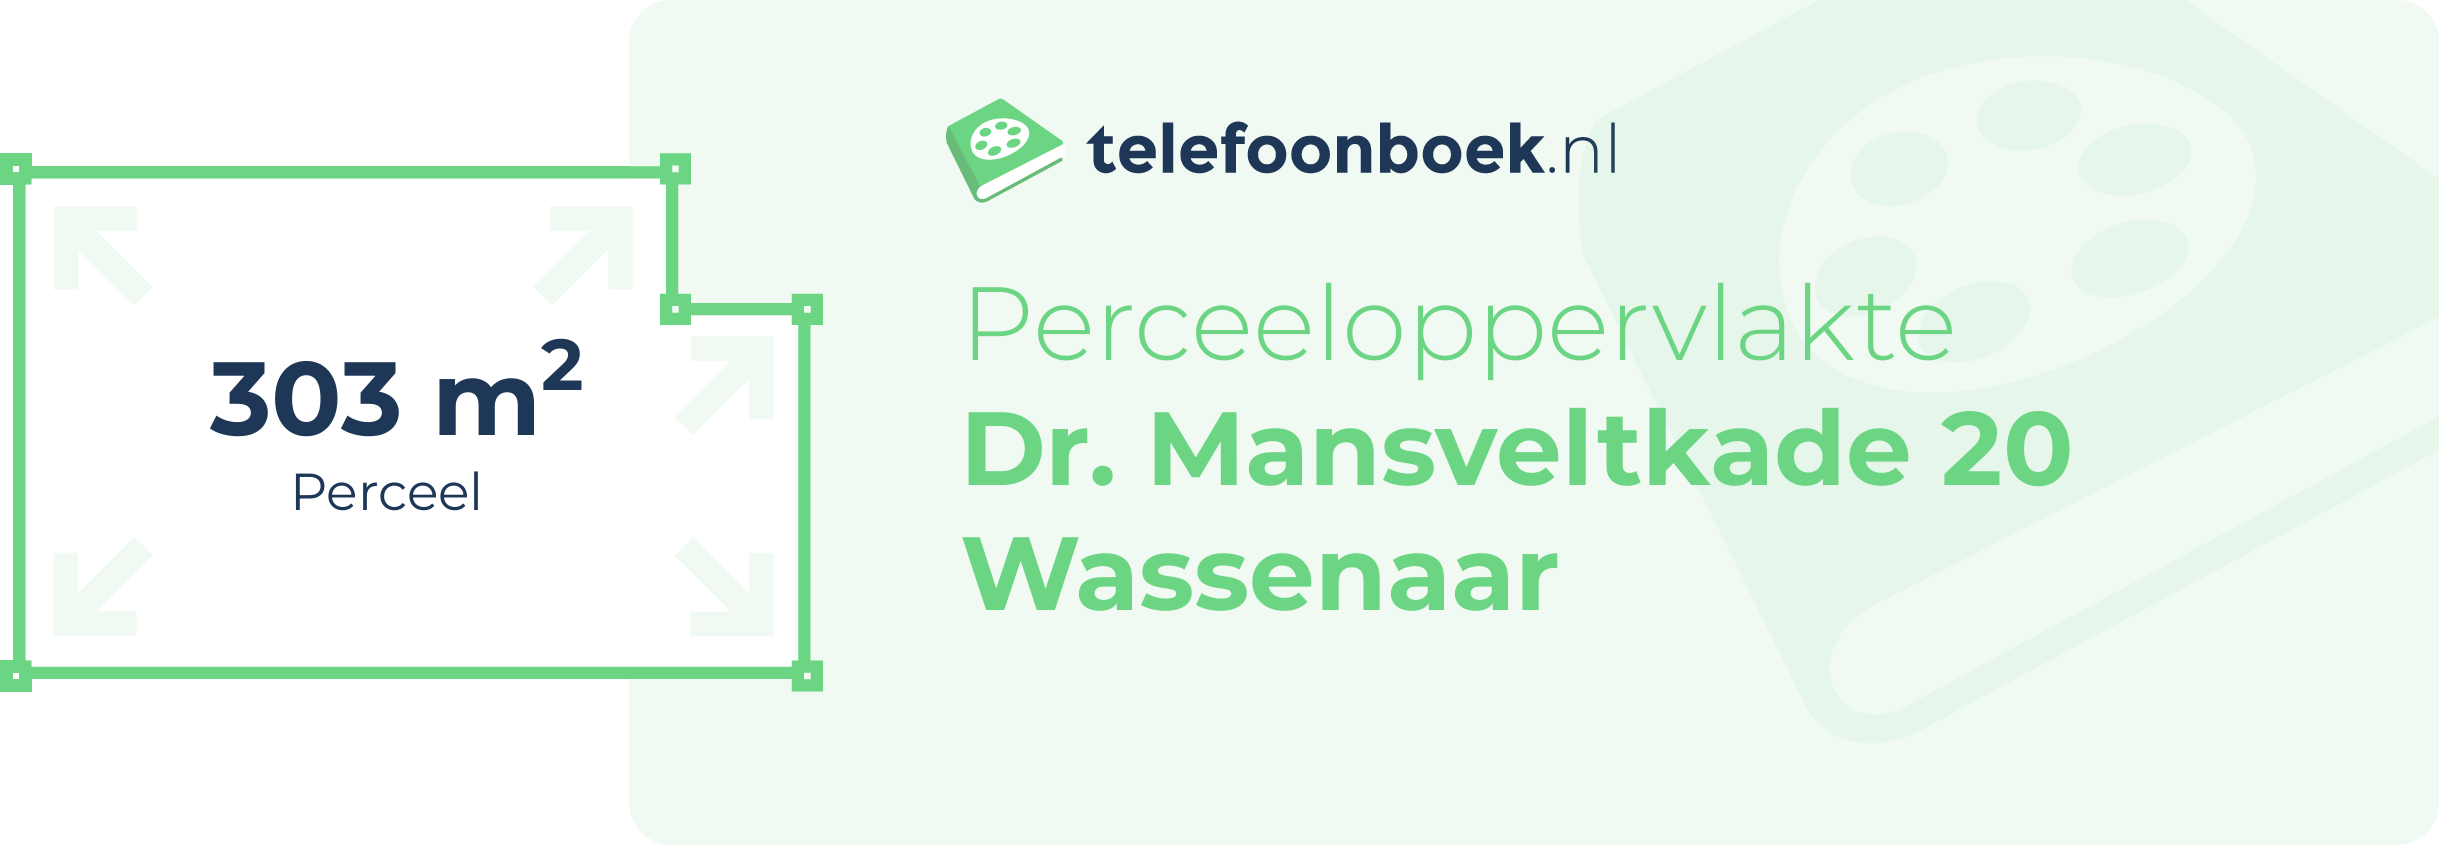 Perceeloppervlakte Dr. Mansveltkade 20 Wassenaar